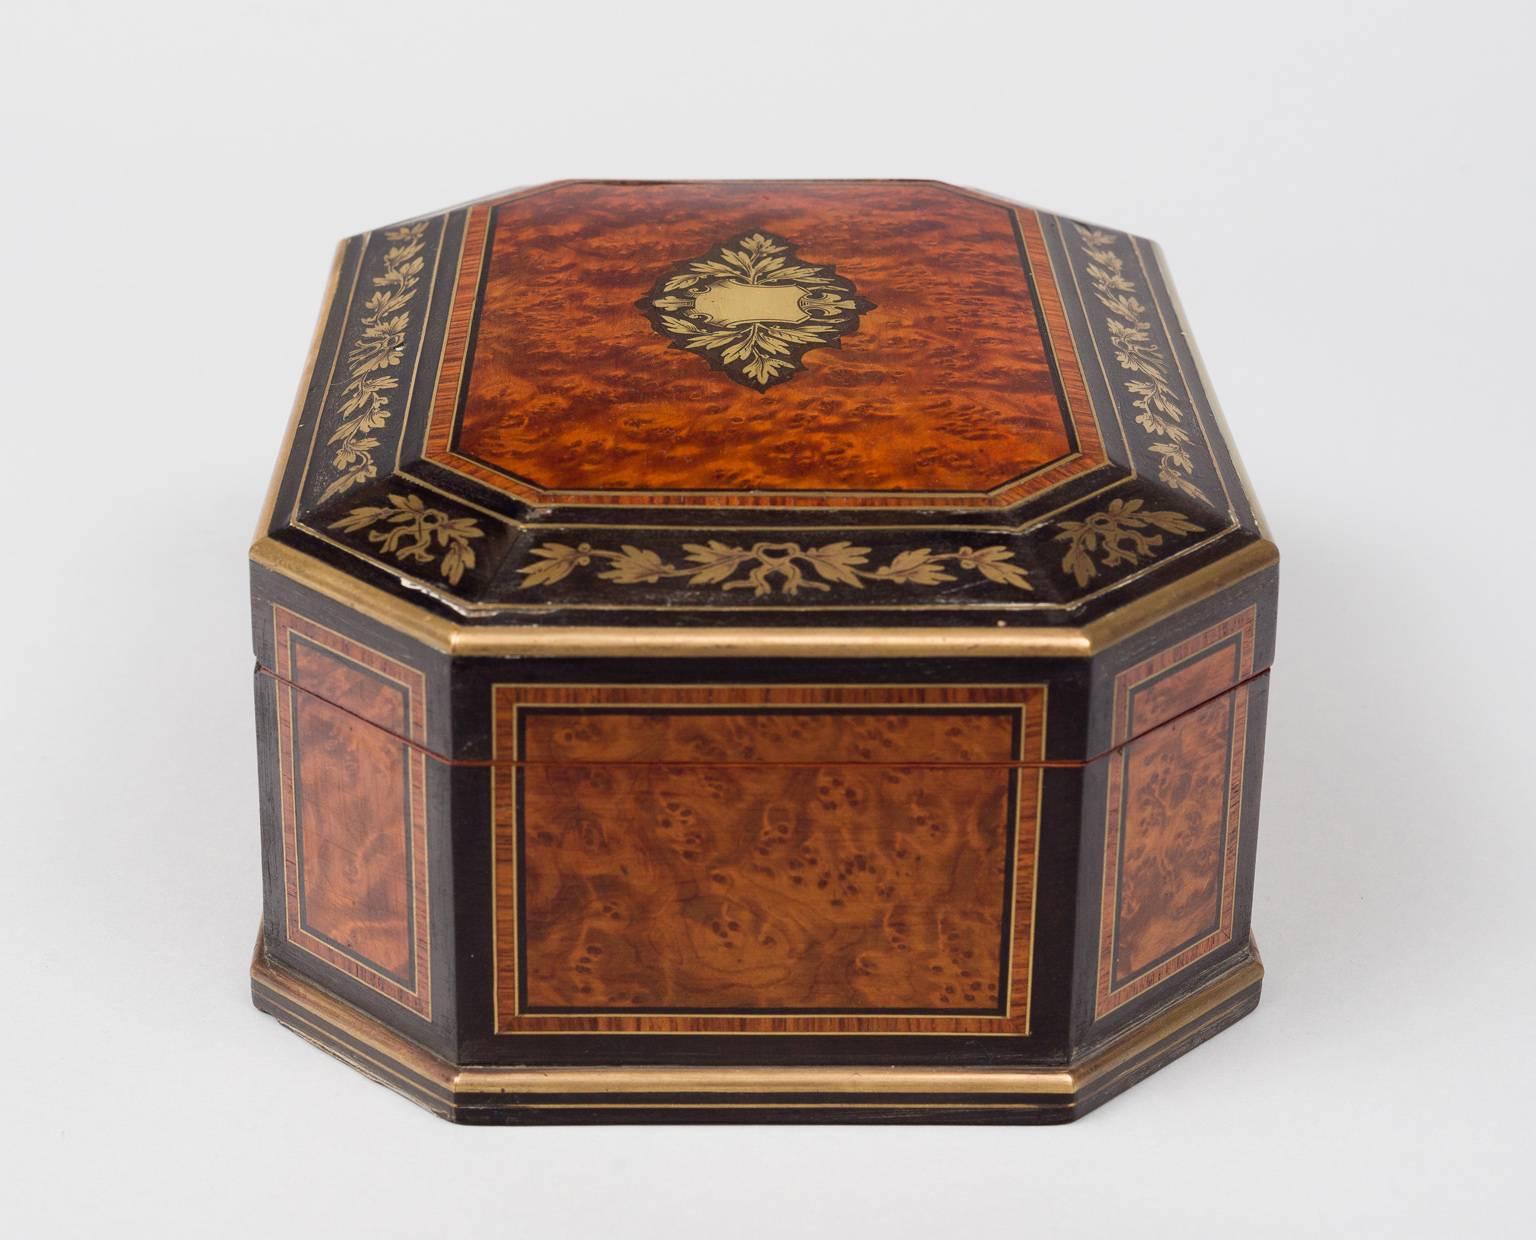 Victorian Walnut and Brass Inlaid Jewelry Box, circa 1850